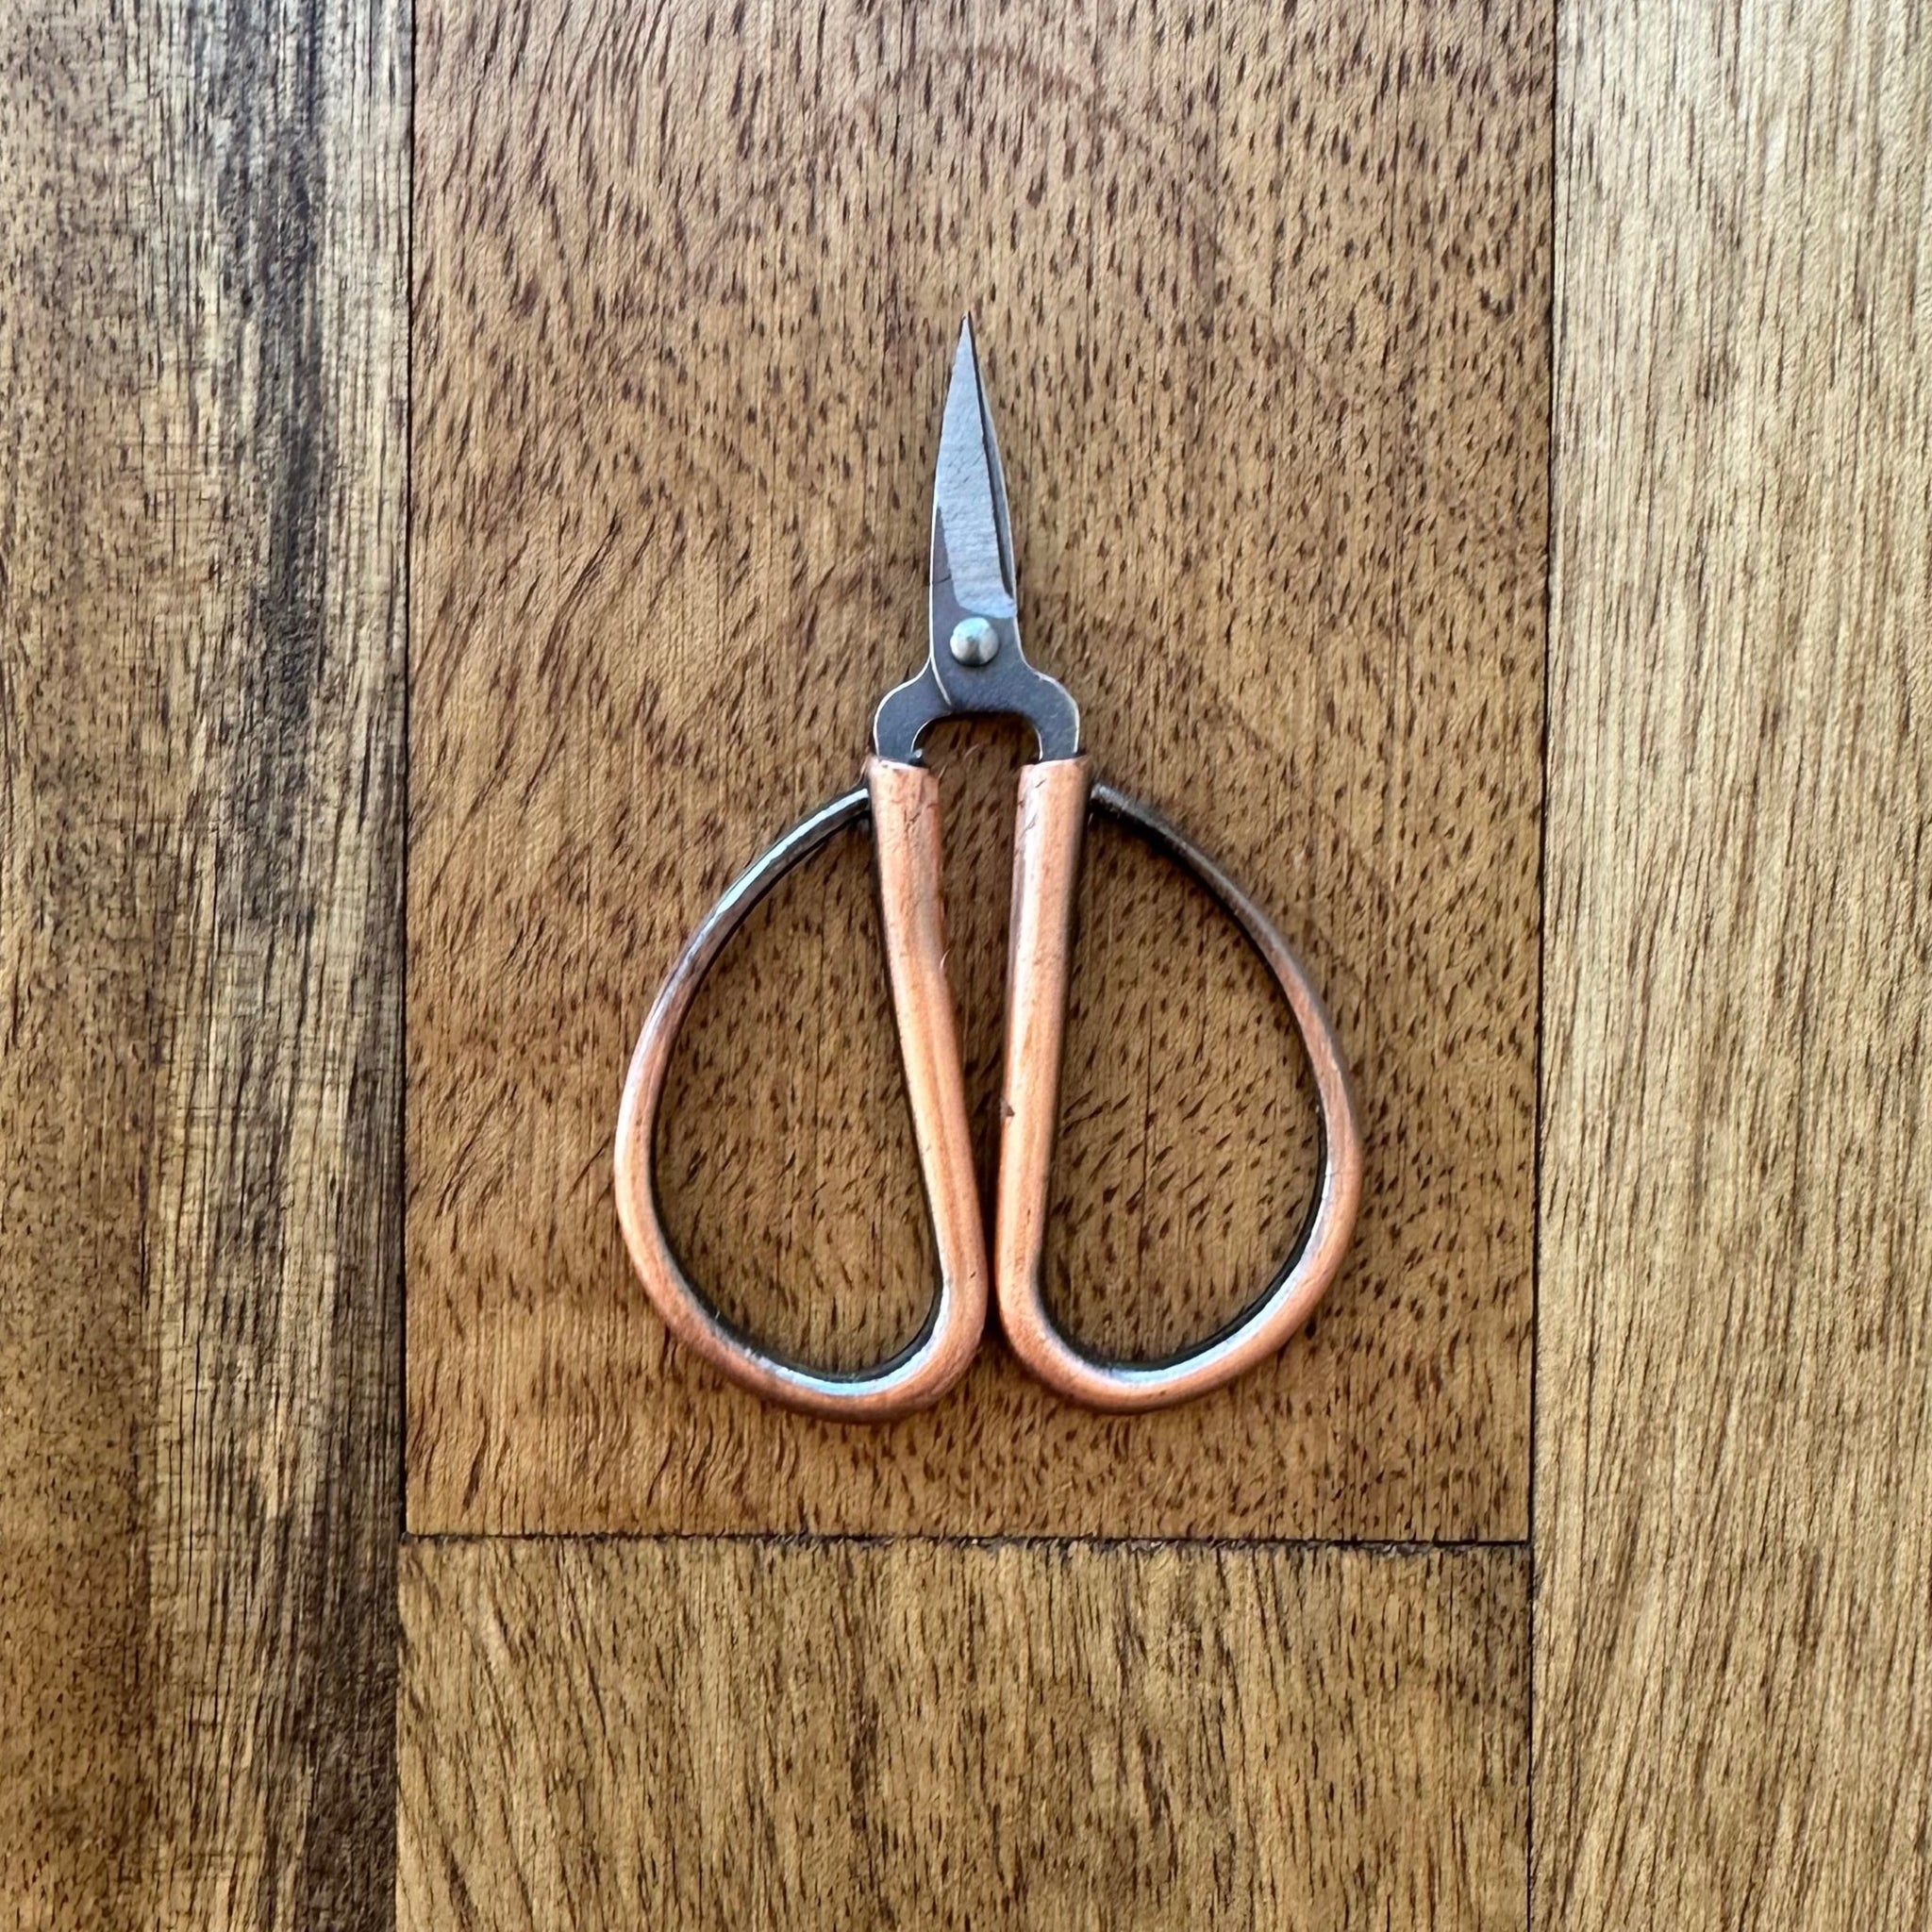 Mini Bonsai Scissors